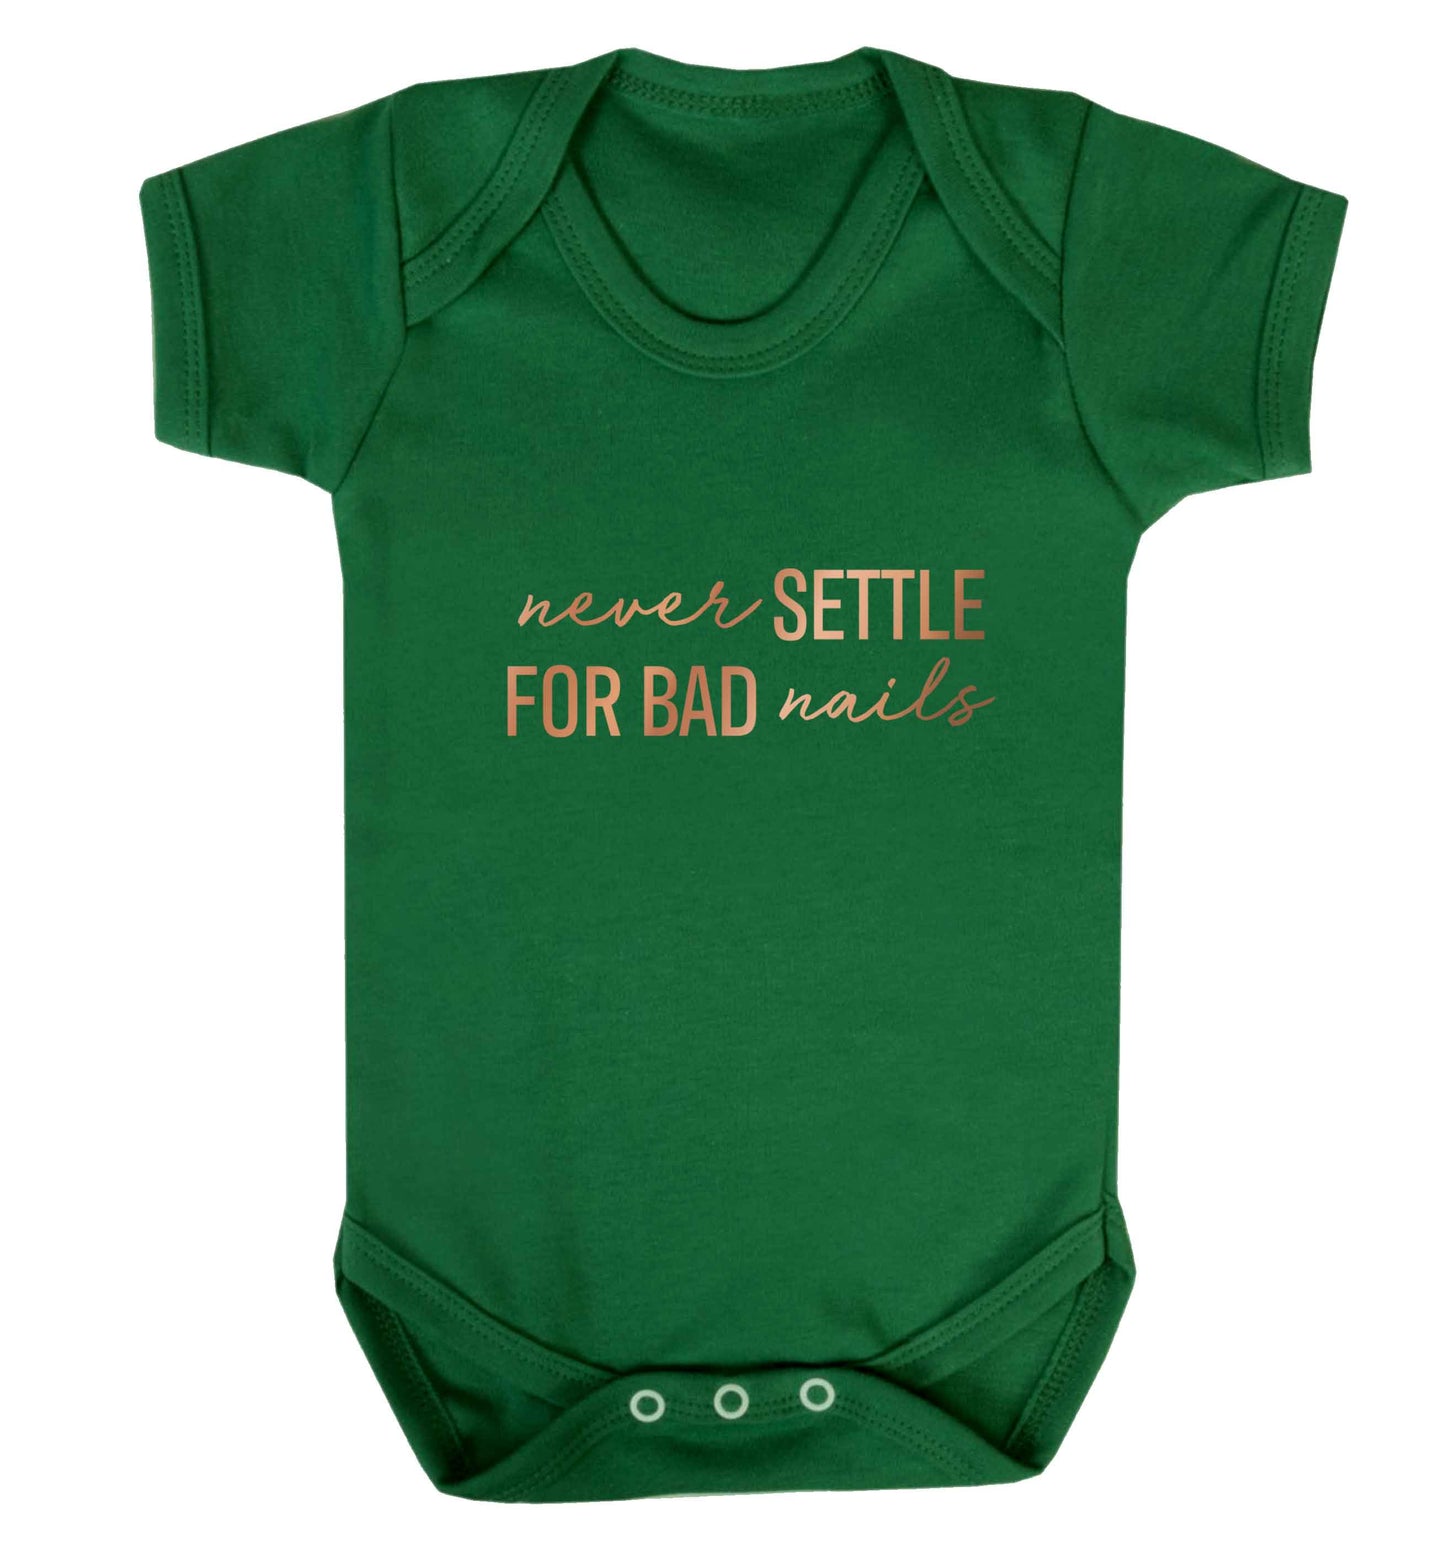 Never settle for bad nails - rose gold baby vest green 18-24 months